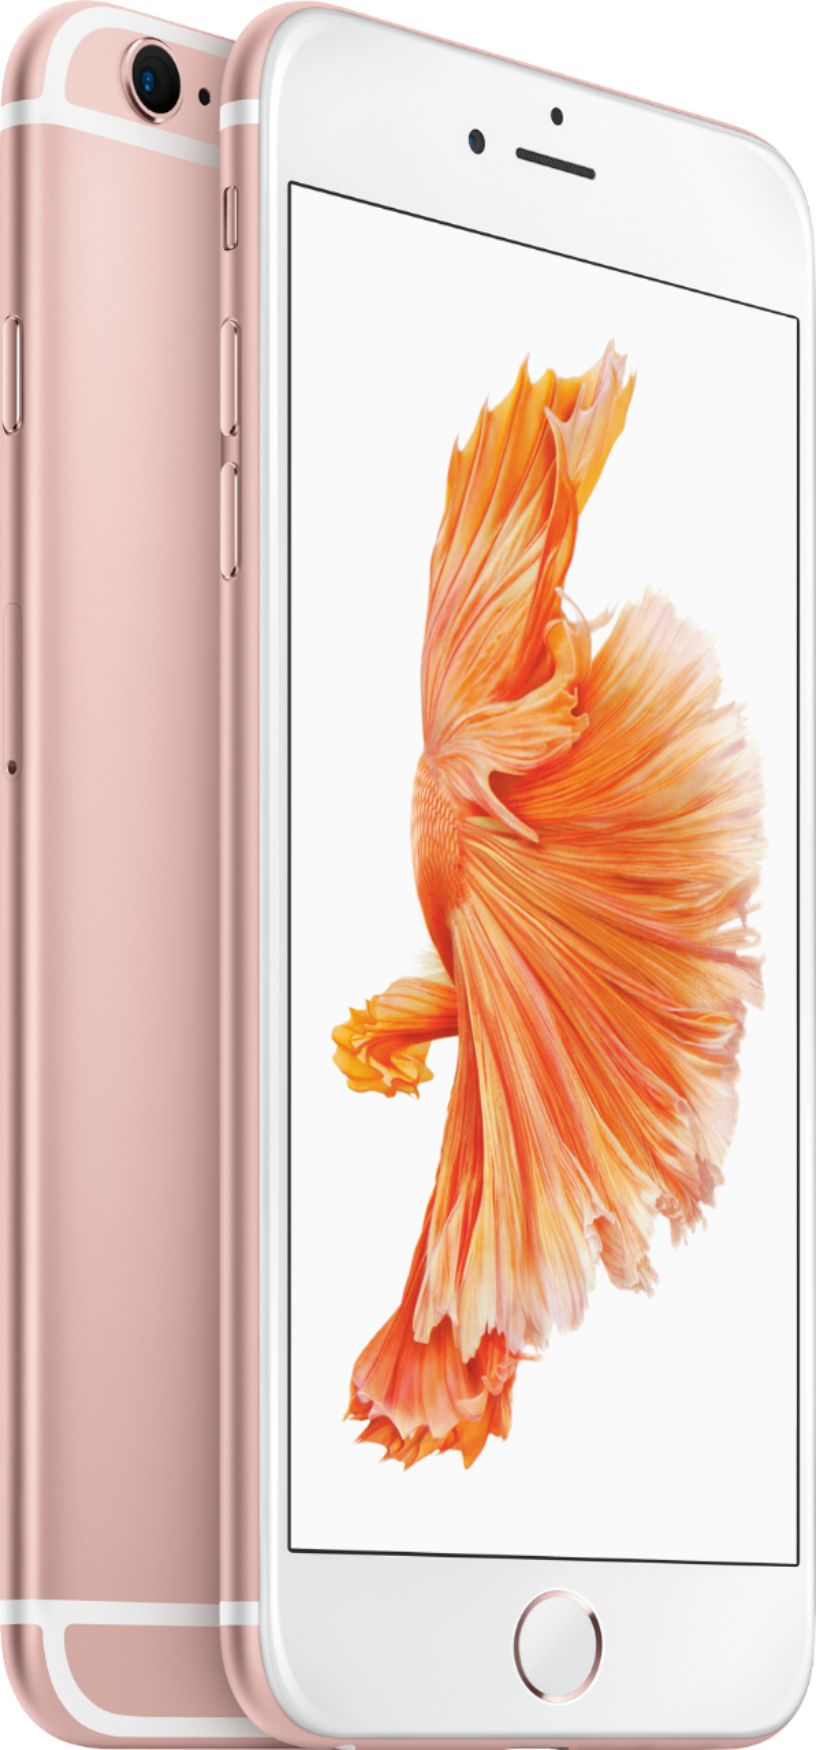 Apple iPhone 6S (Unlocked) 32GB Rose Gold